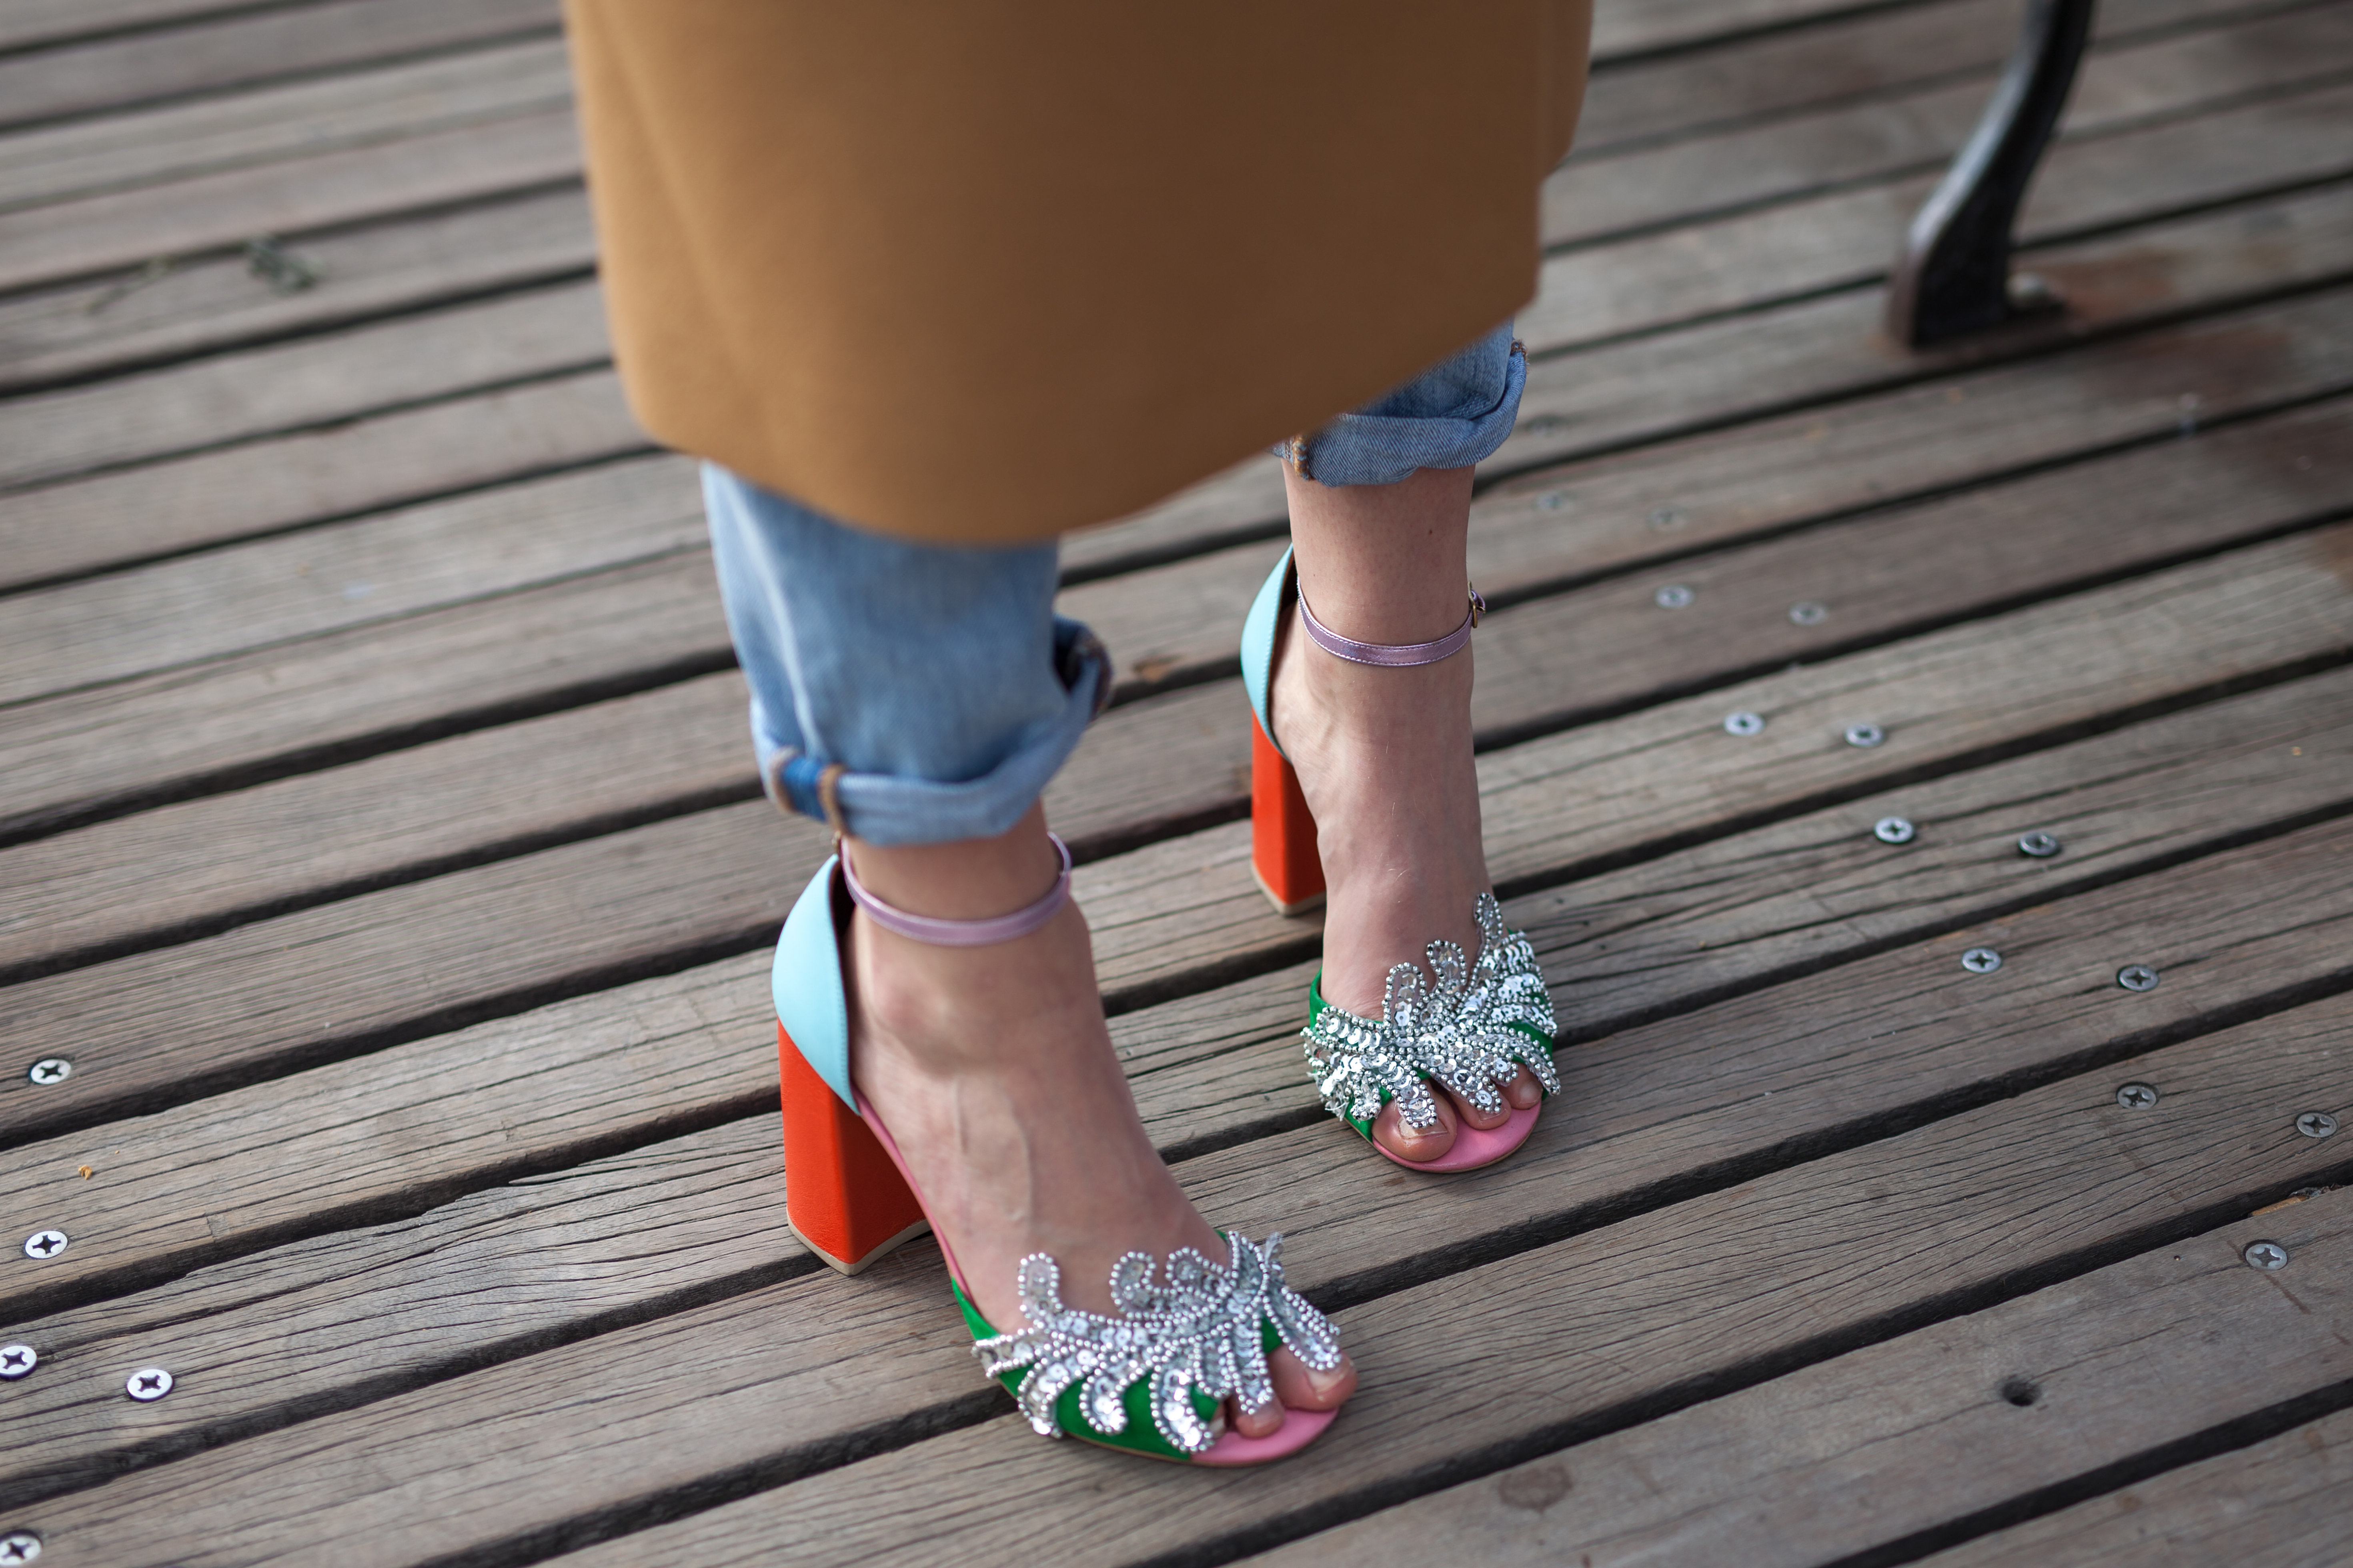 platform heels for wide feet